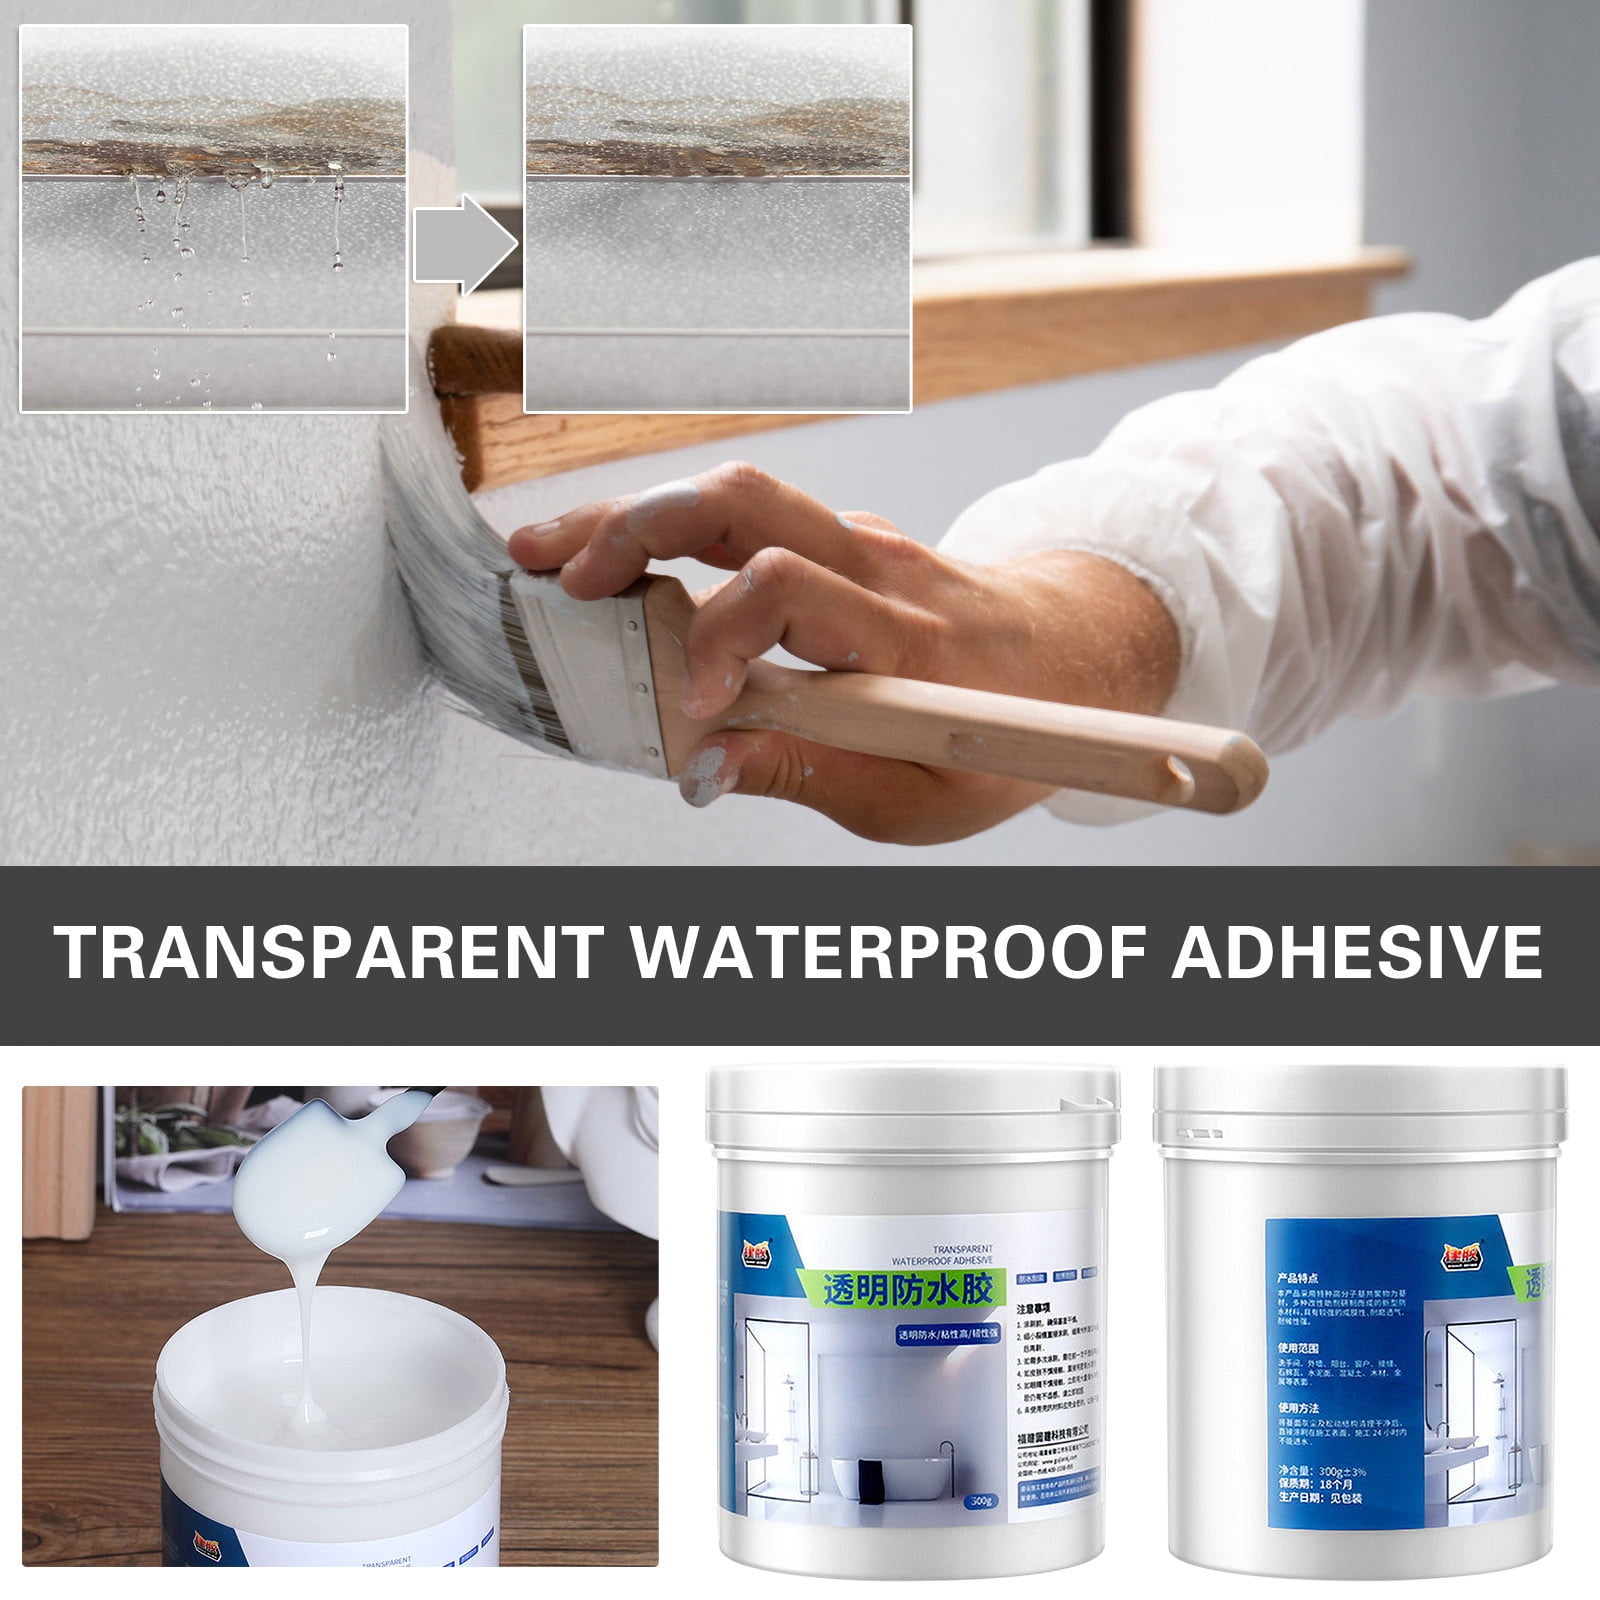 300ml Bathroom Transparent Waterproof Adhesive, Super Invisible Waterproof  Glue Sealant, No Trace Leak Repair Tool for Wall Bathroom Roof Indoors and